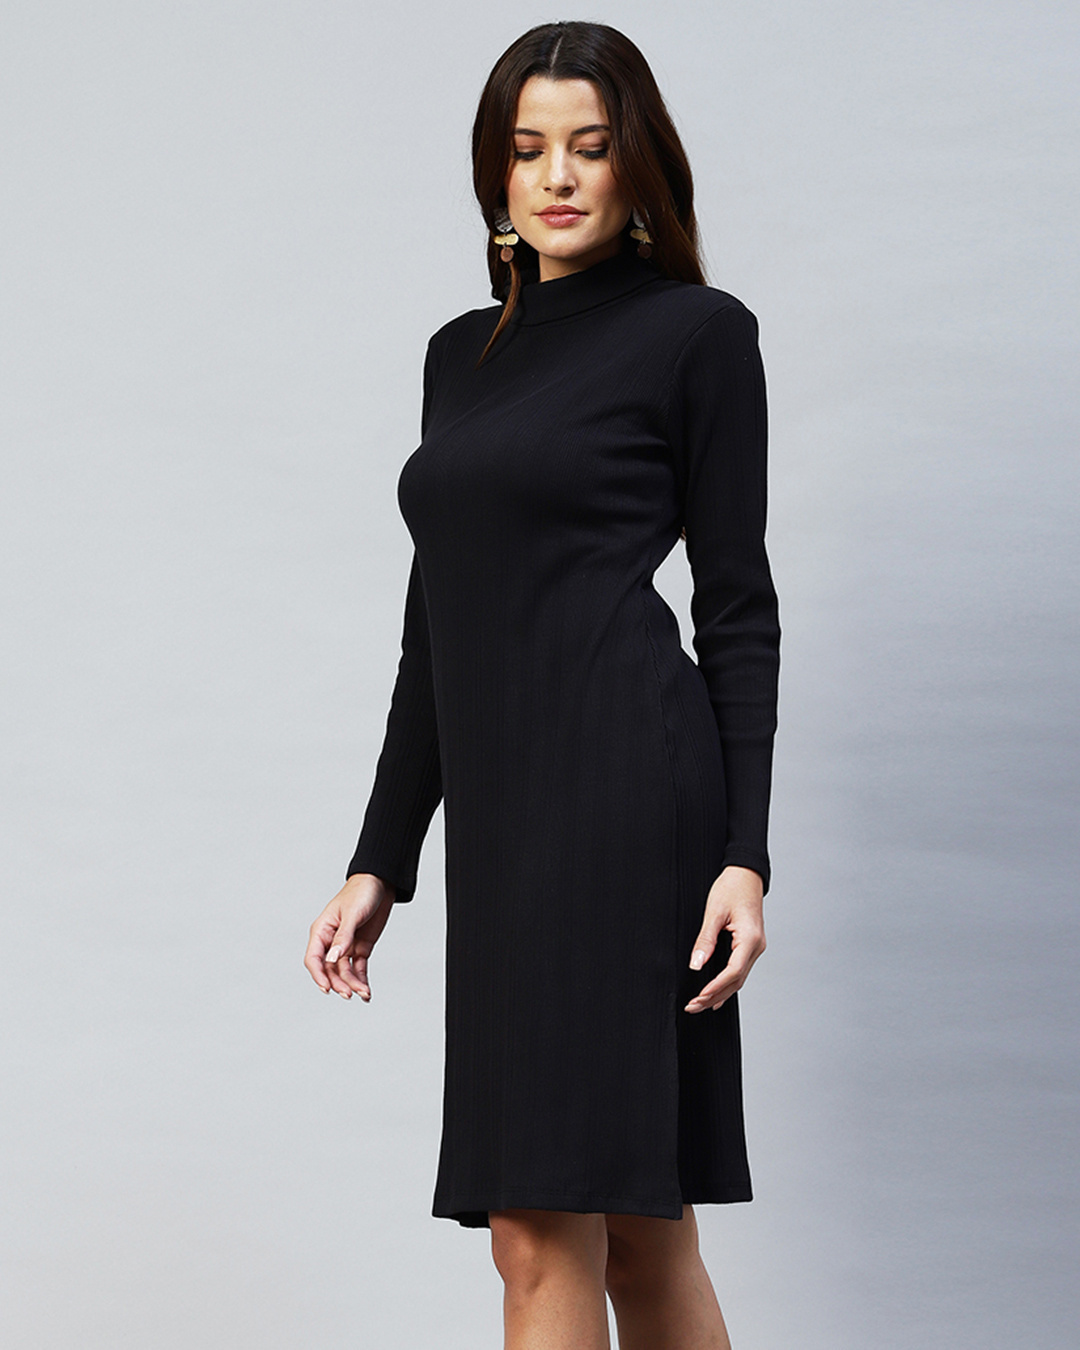 Buy Women's Black Slim Fit Dress Online at Bewakoof